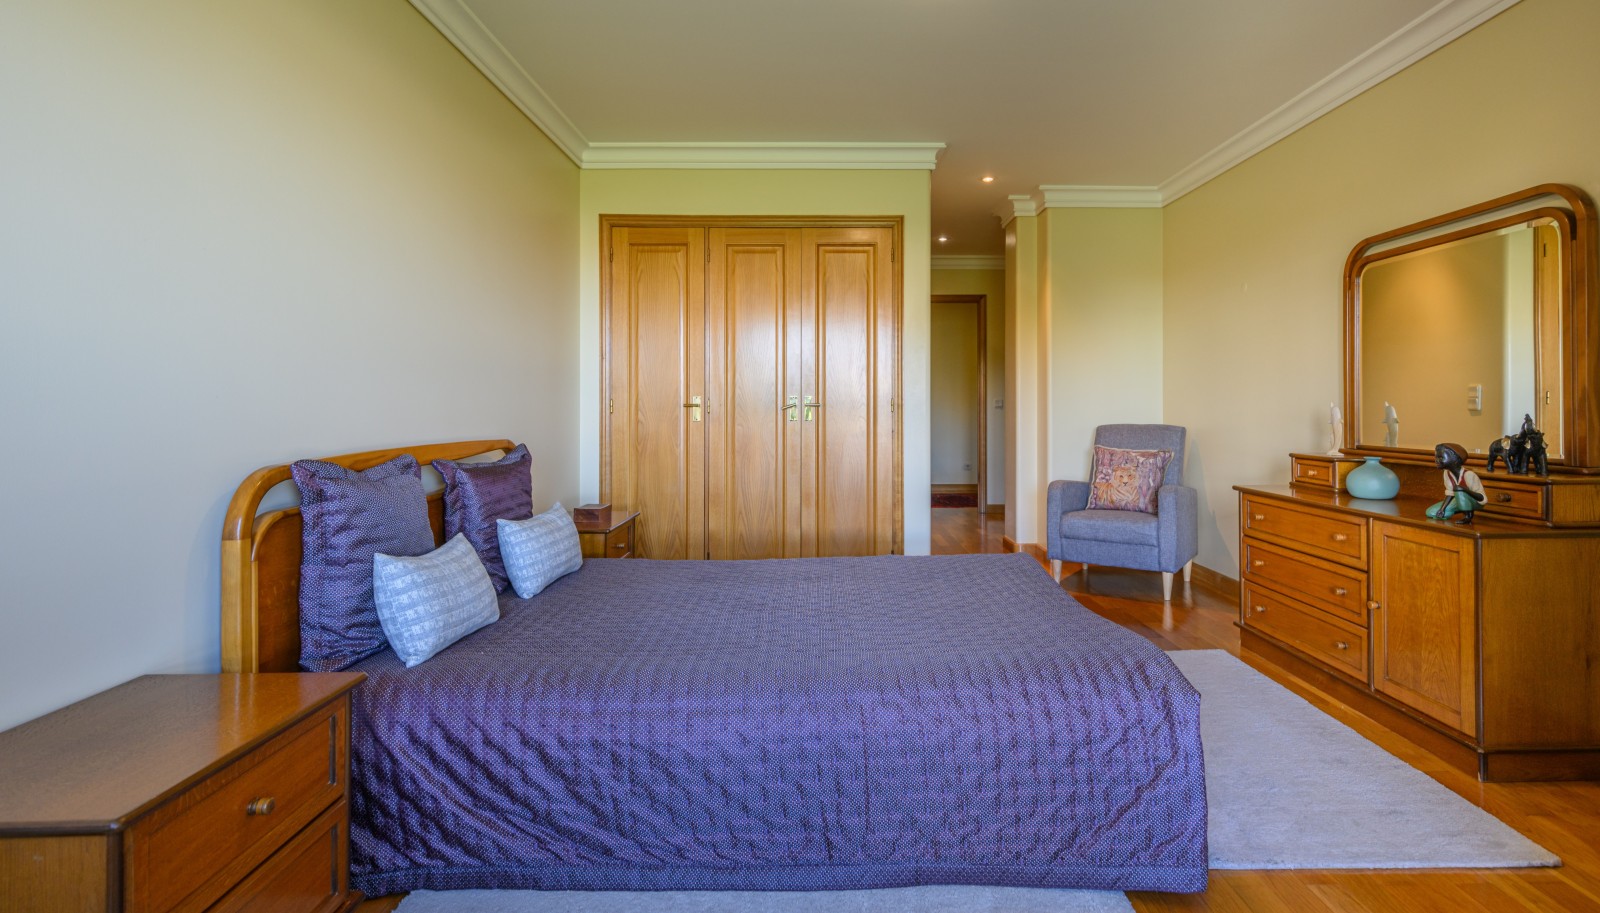 Appartement de 5 chambres avec balcon, à vendre, à V. N. Gaia, Porto, Portugal_236324